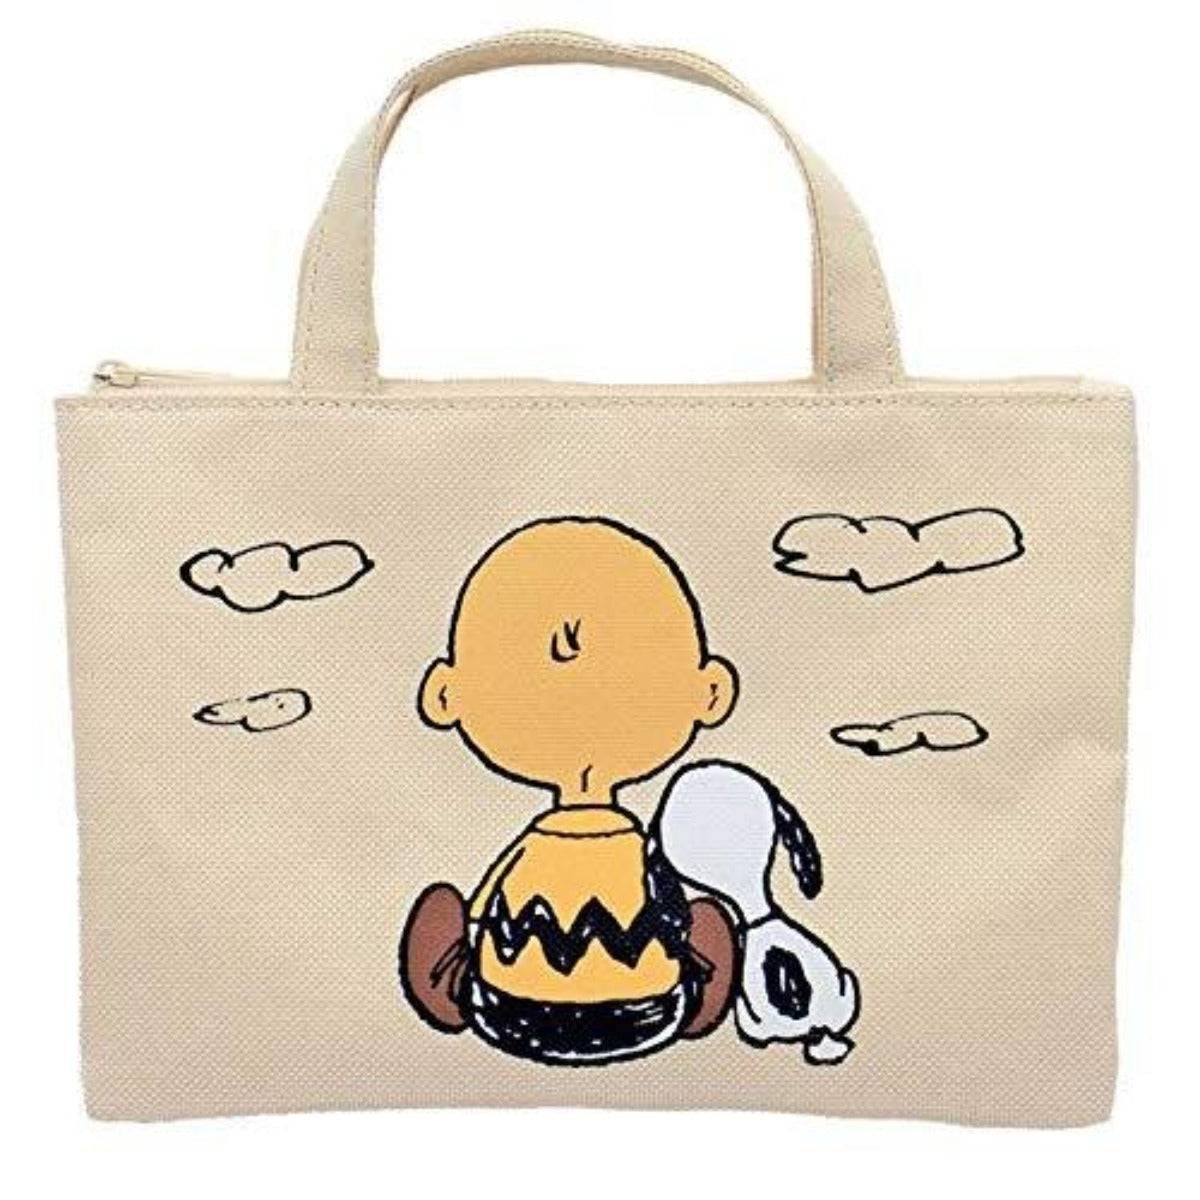 Pouch - Snoopy Handbag Style Flat